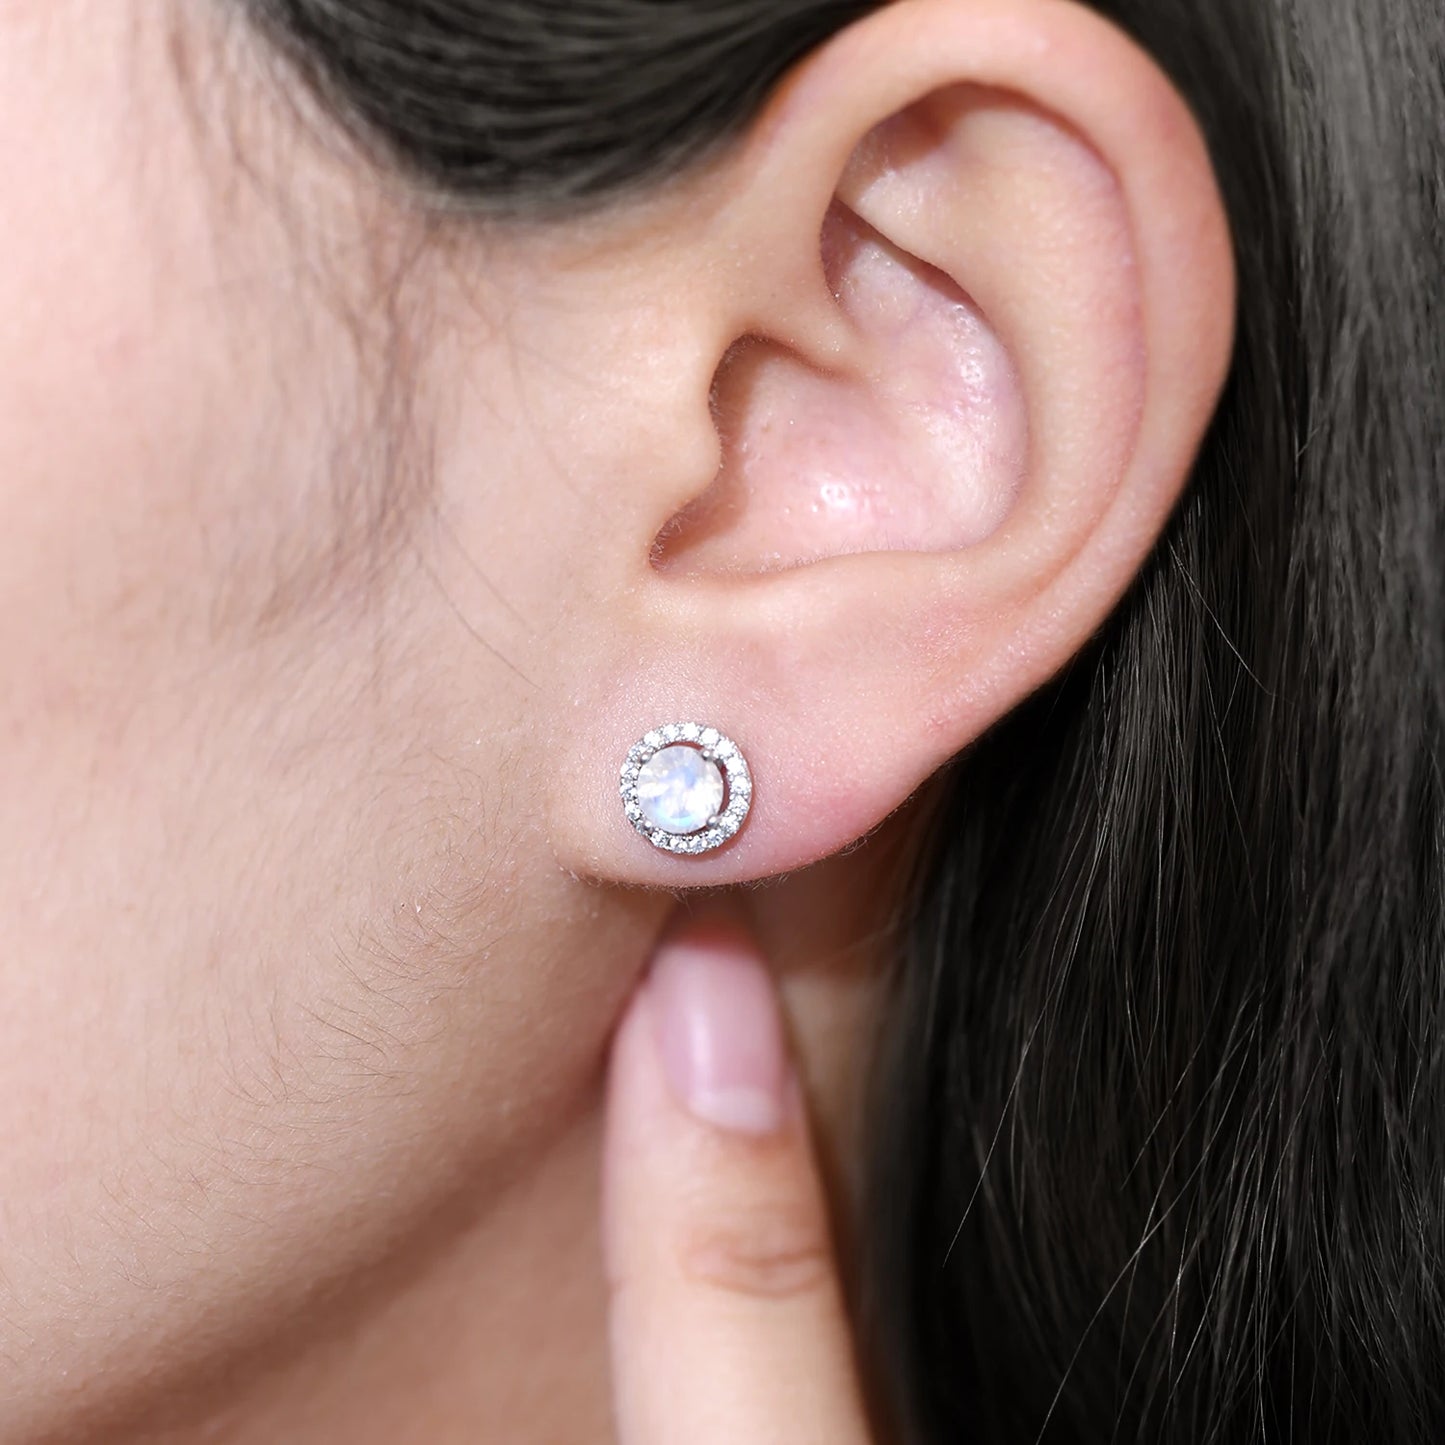 GEM'S BALLET Minimalist Earrings 5mm Milky Blue Moonstone Studs Earrings in 925 Sterling Silver June Birthstone Gift For Her